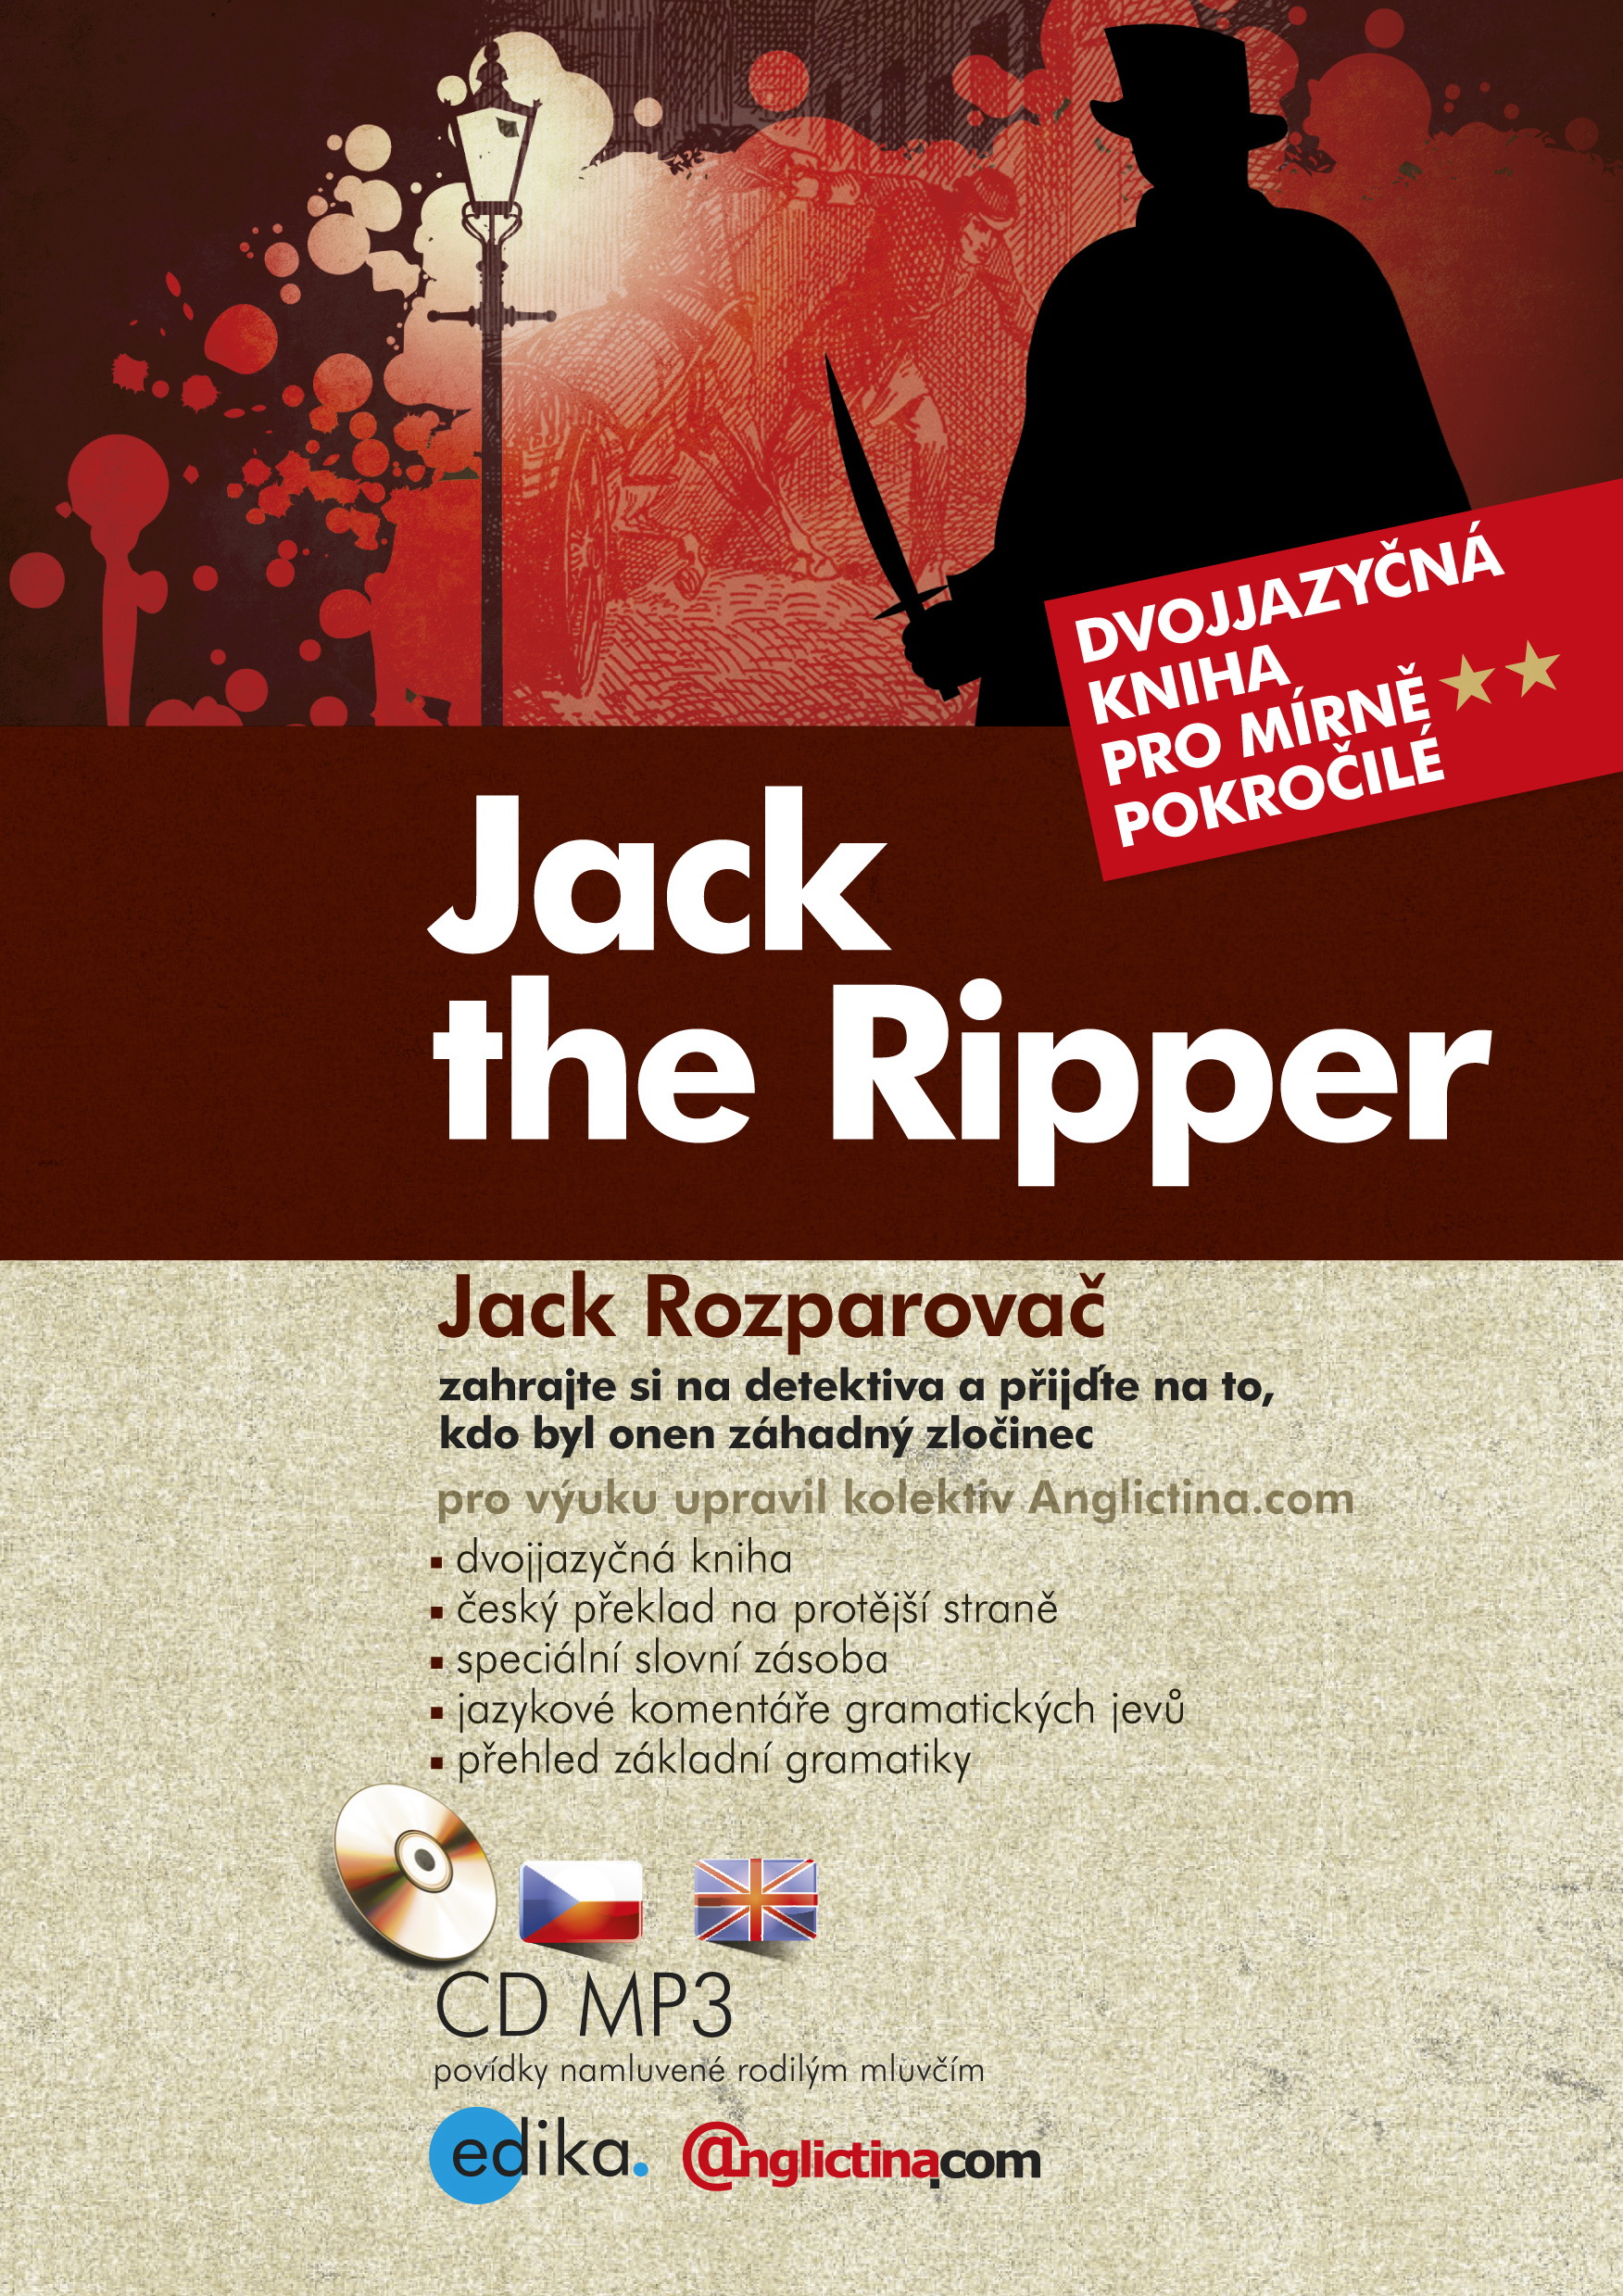 jack-rozparovac 15744